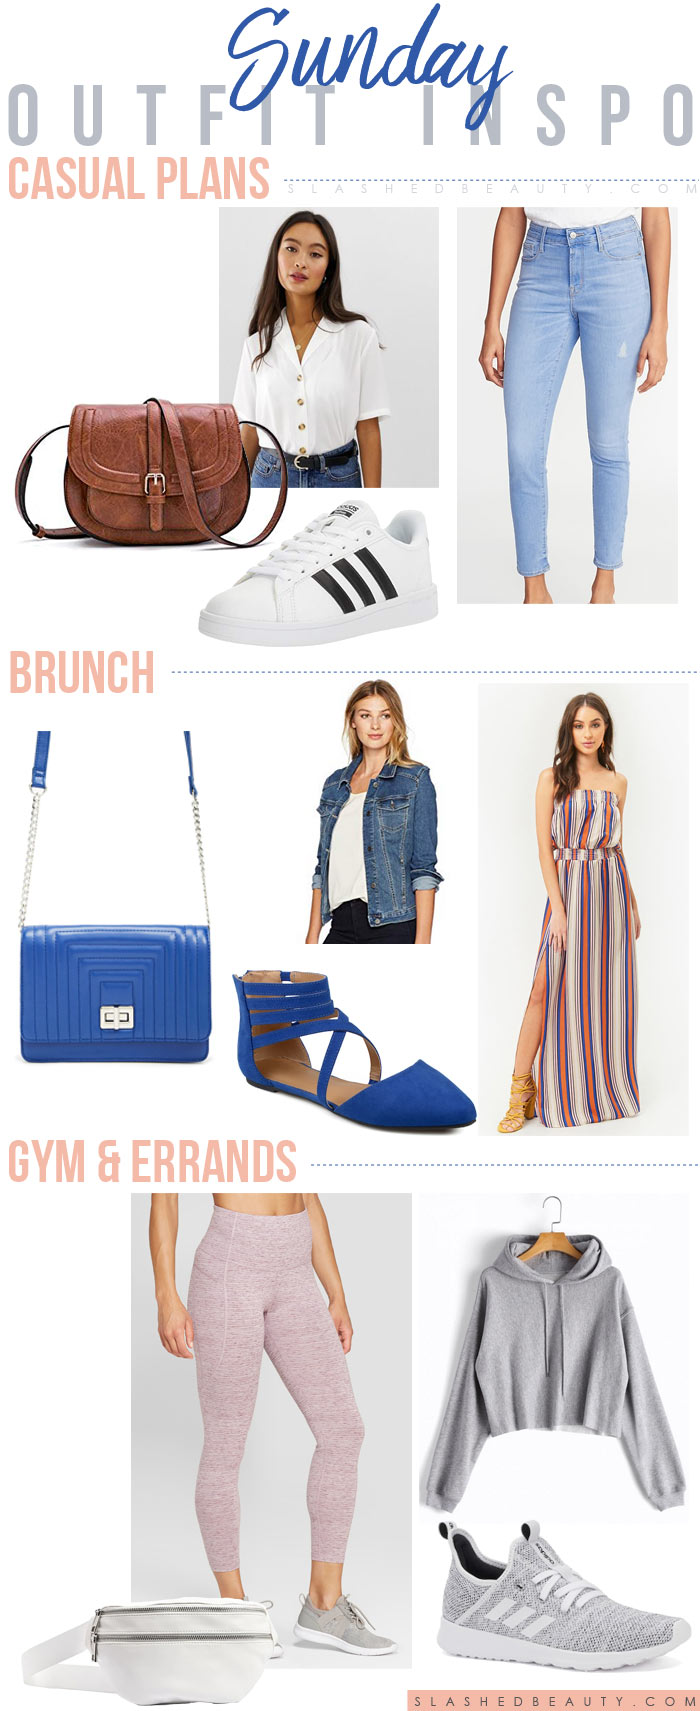 Sunday Outfit Inspo: Casual Plans, Brunch & Errands